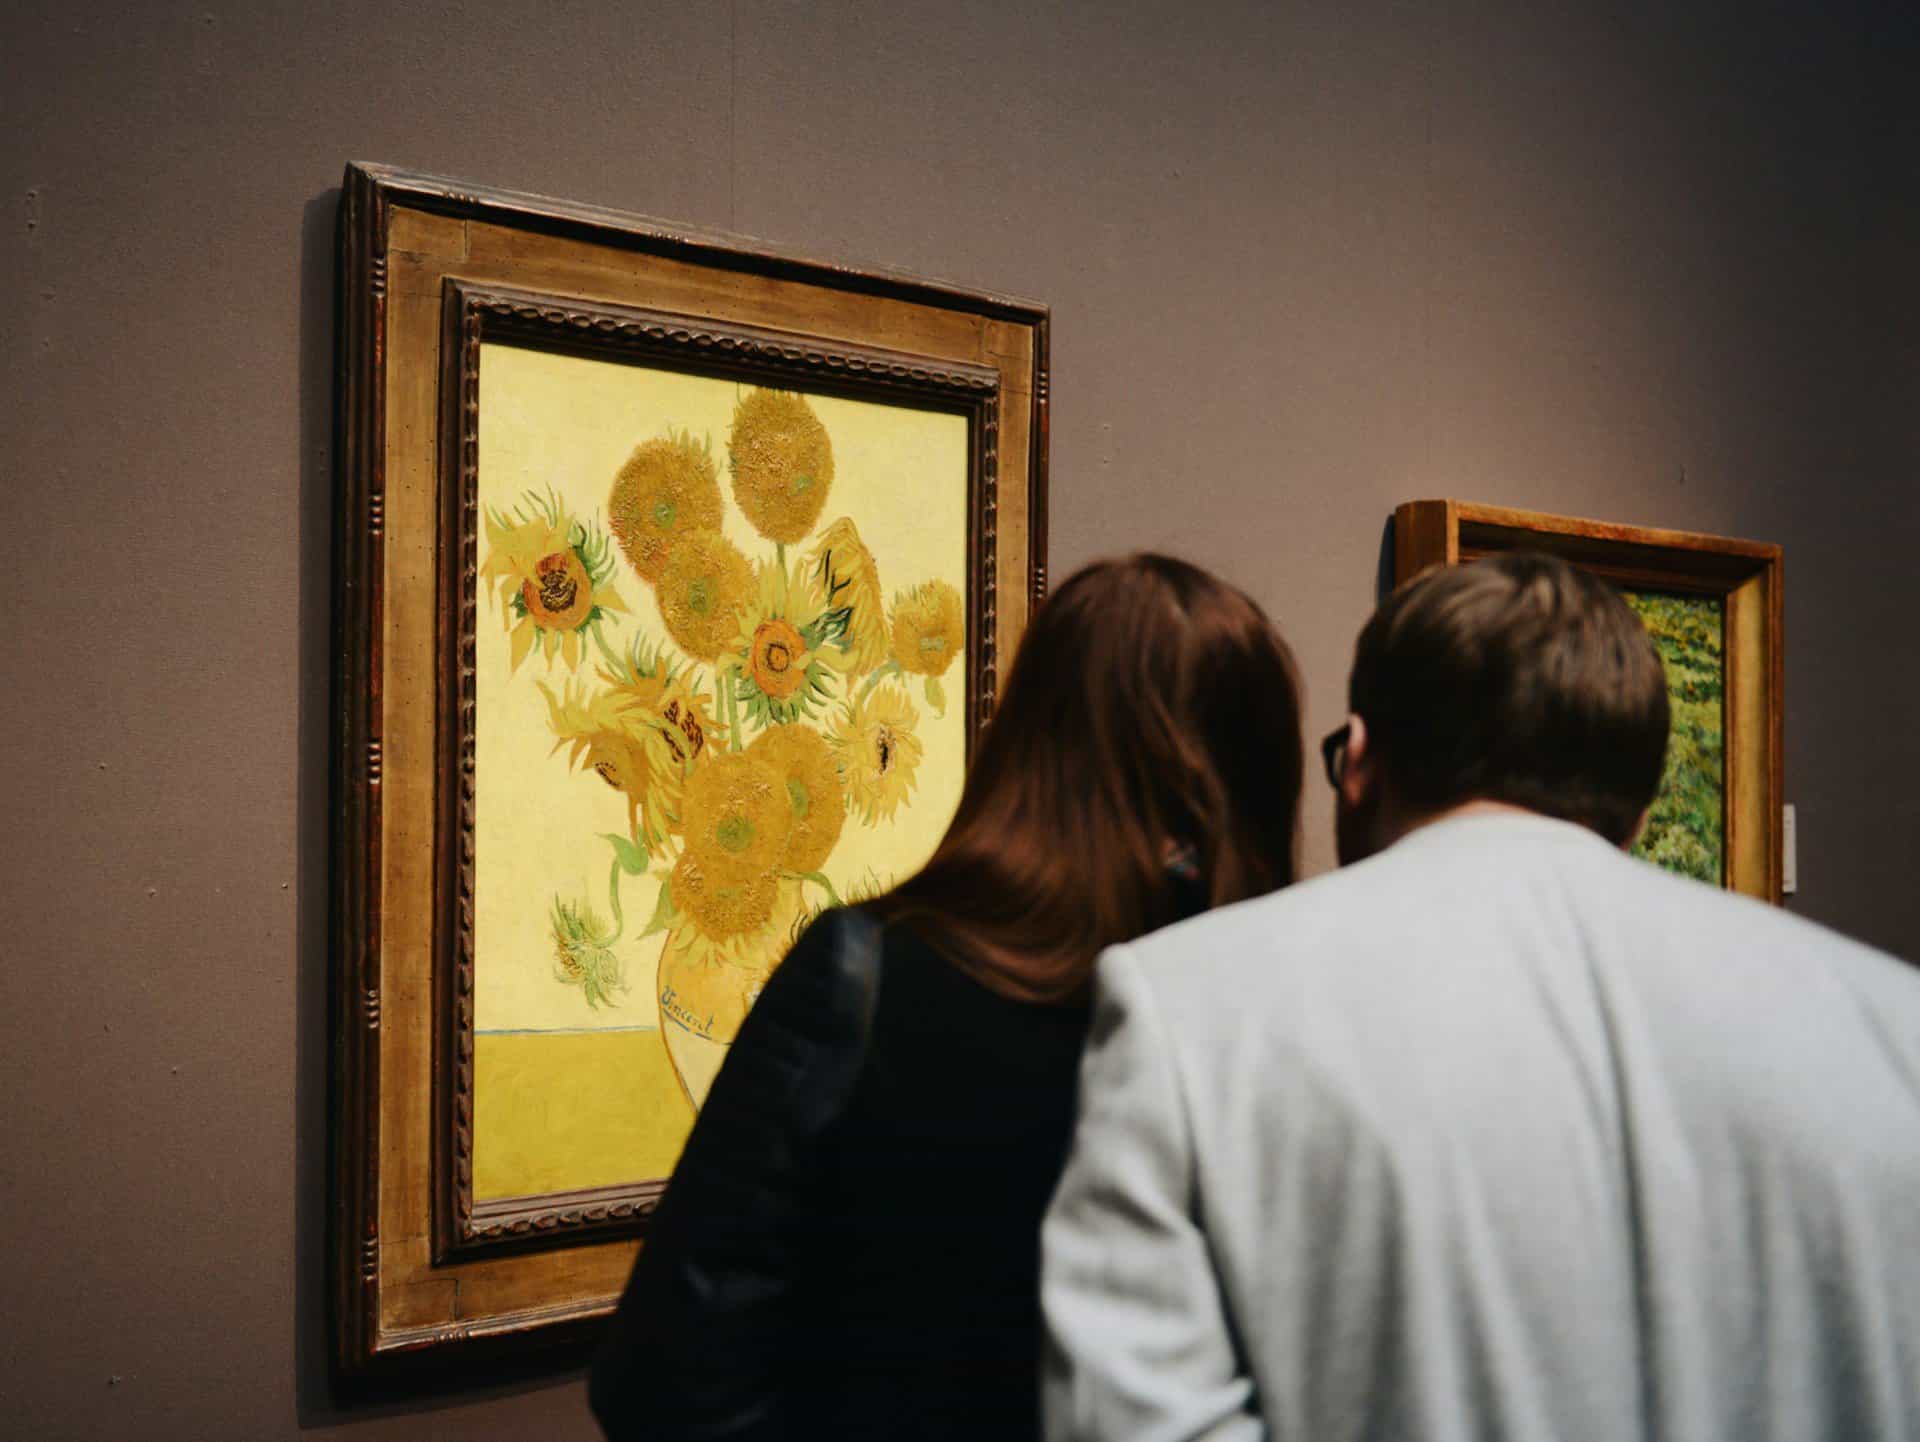 Couple admiring Van Gogh's Sunflowers painting in gallery.